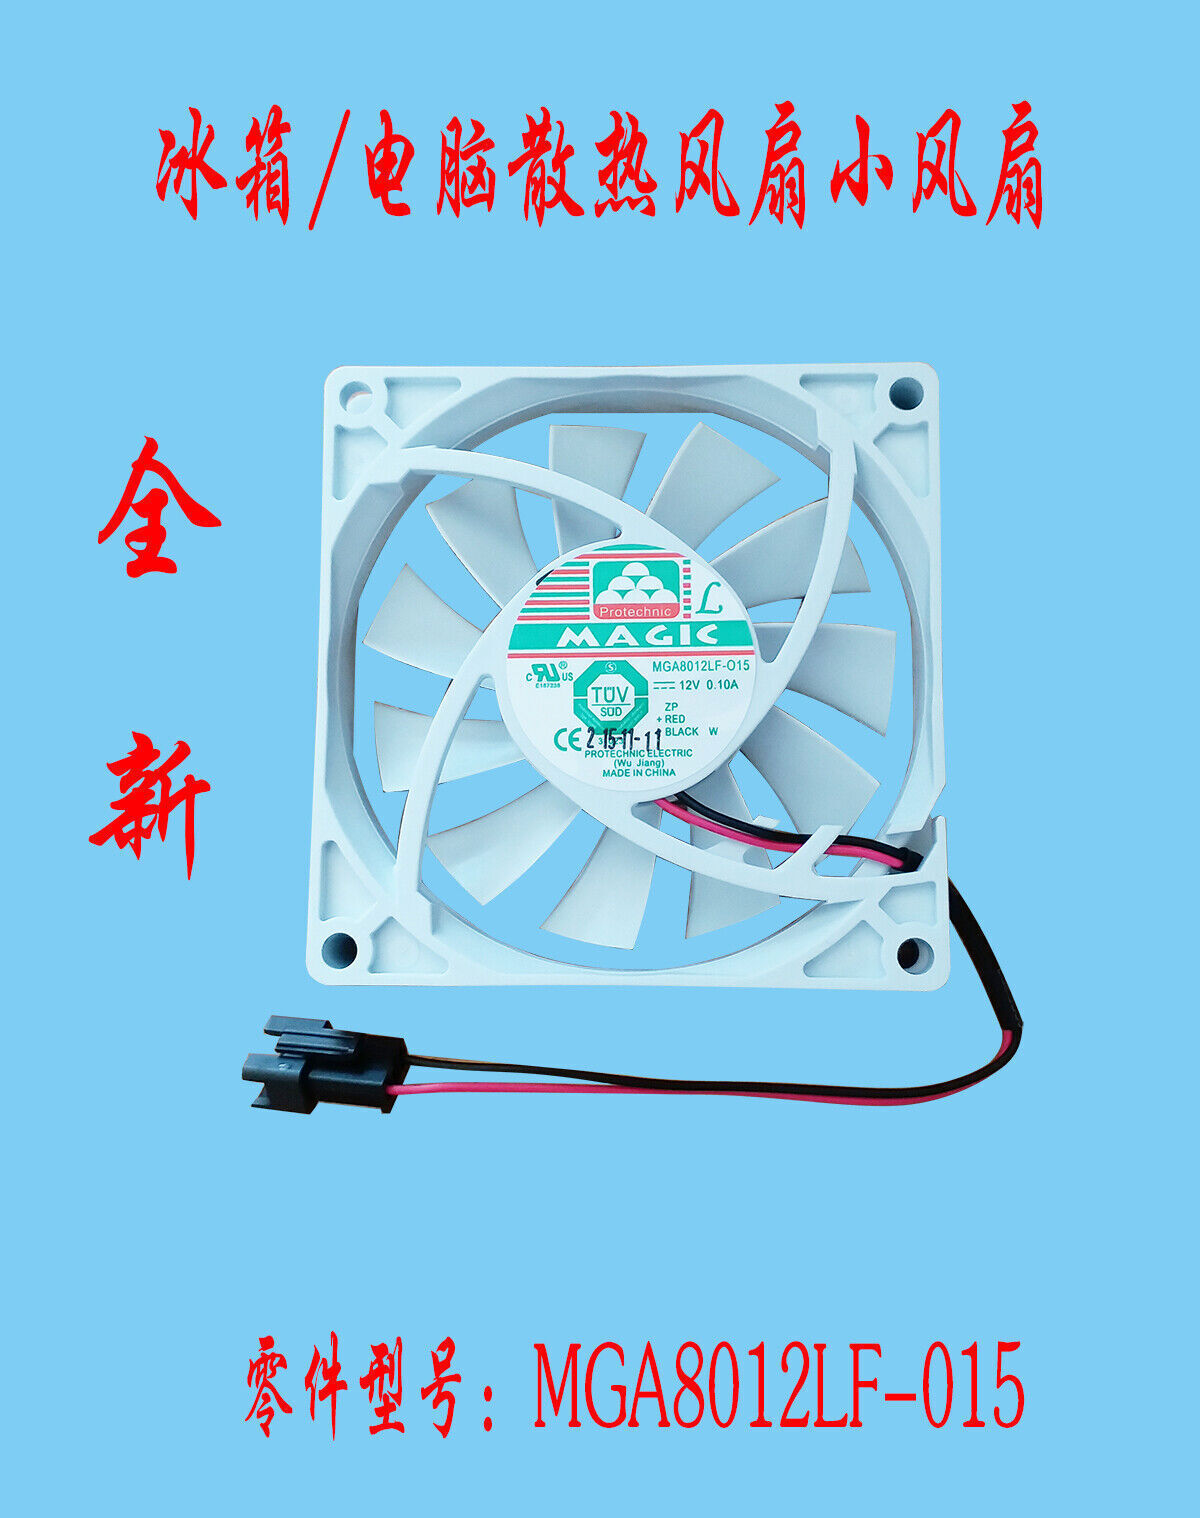 For Genuine Electrolux Fan Fridge Parts Mga8012lf-015 12a 0.1a